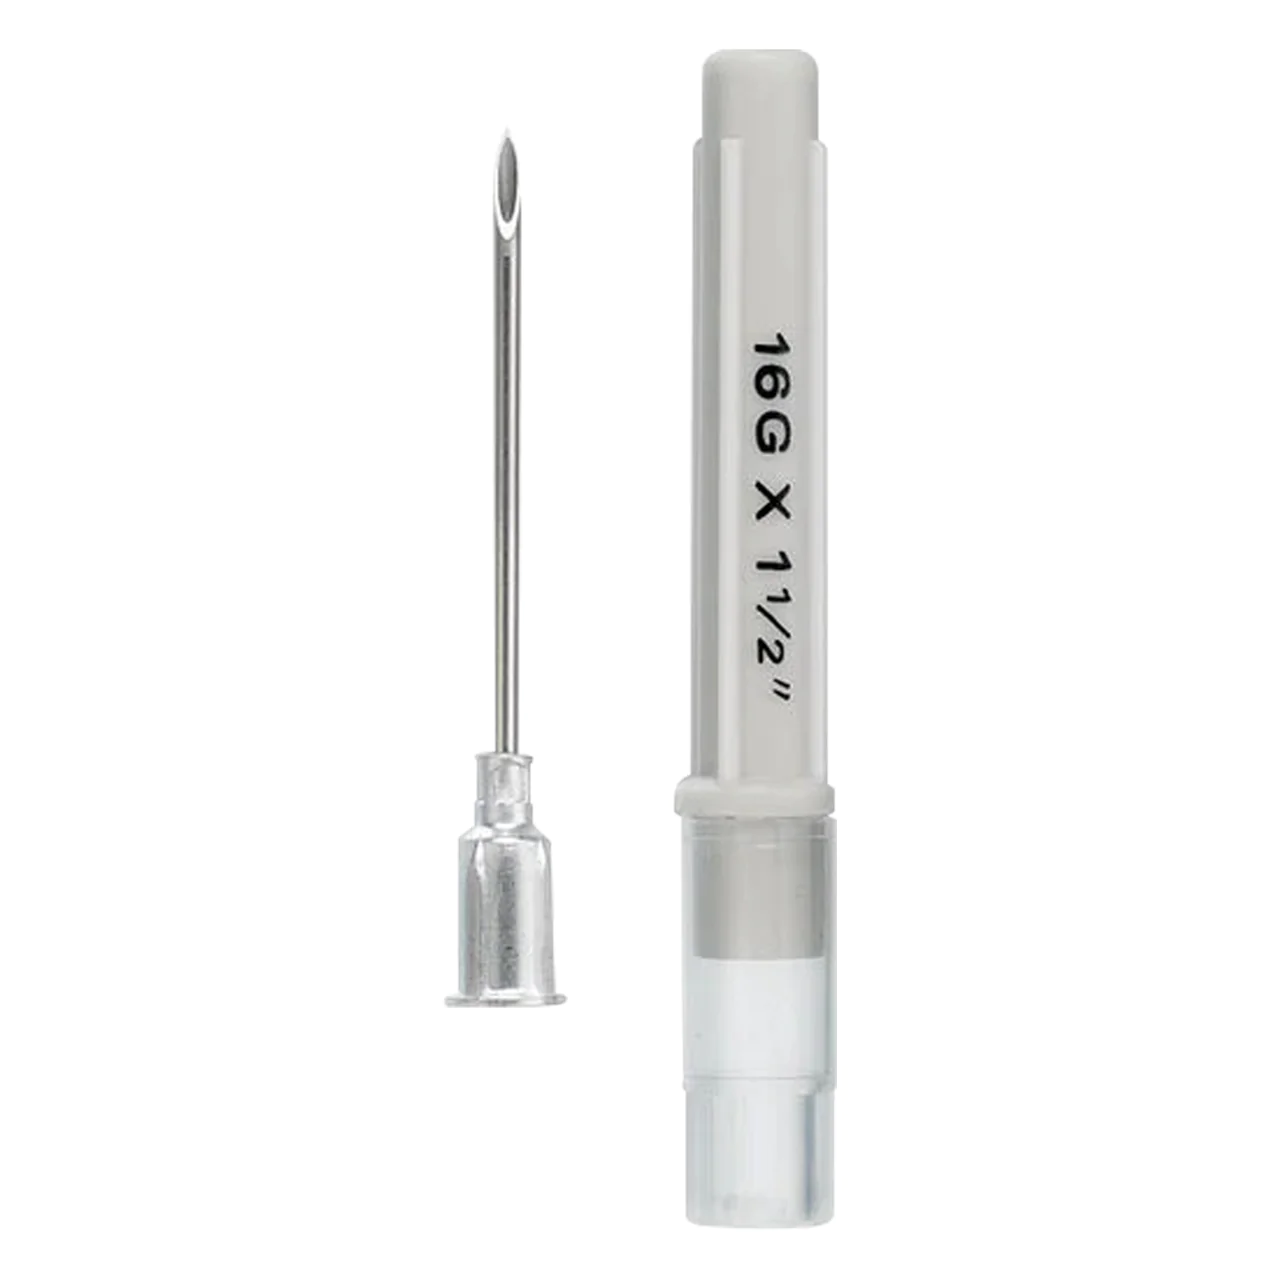 IVS Aluminum Hub Needle (100pk) - 16g x 1/2"